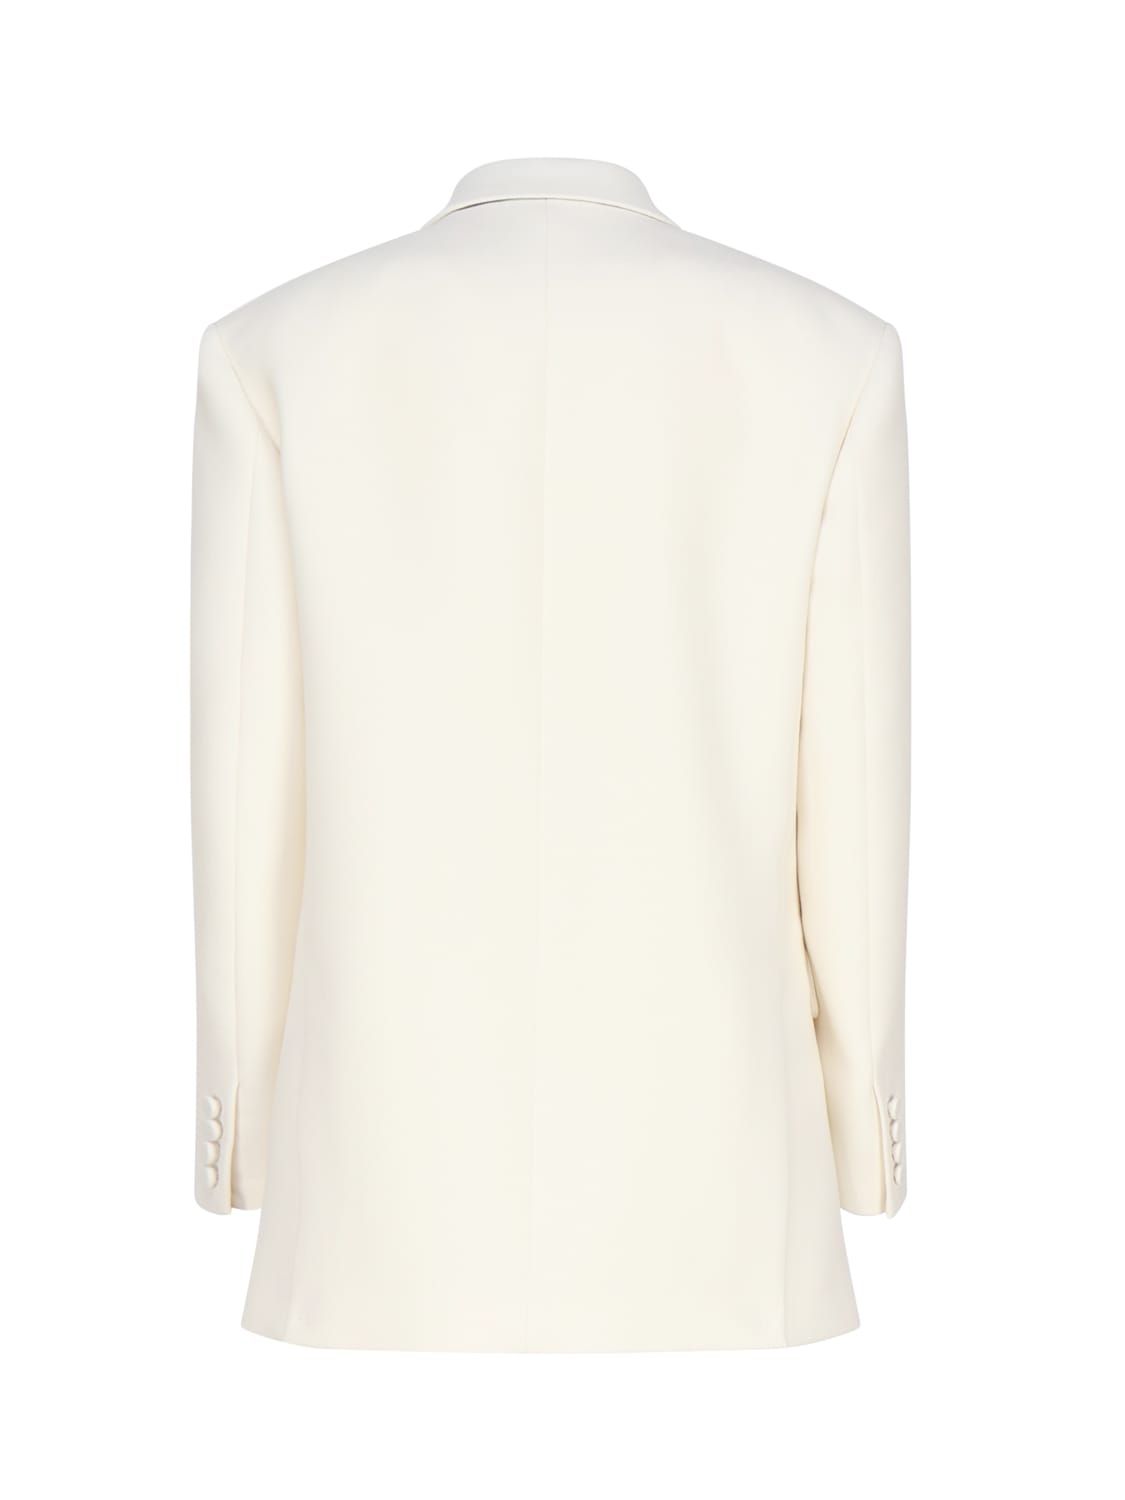 Shop Valentino Suit Jacket In Virgin Wool In White, Black